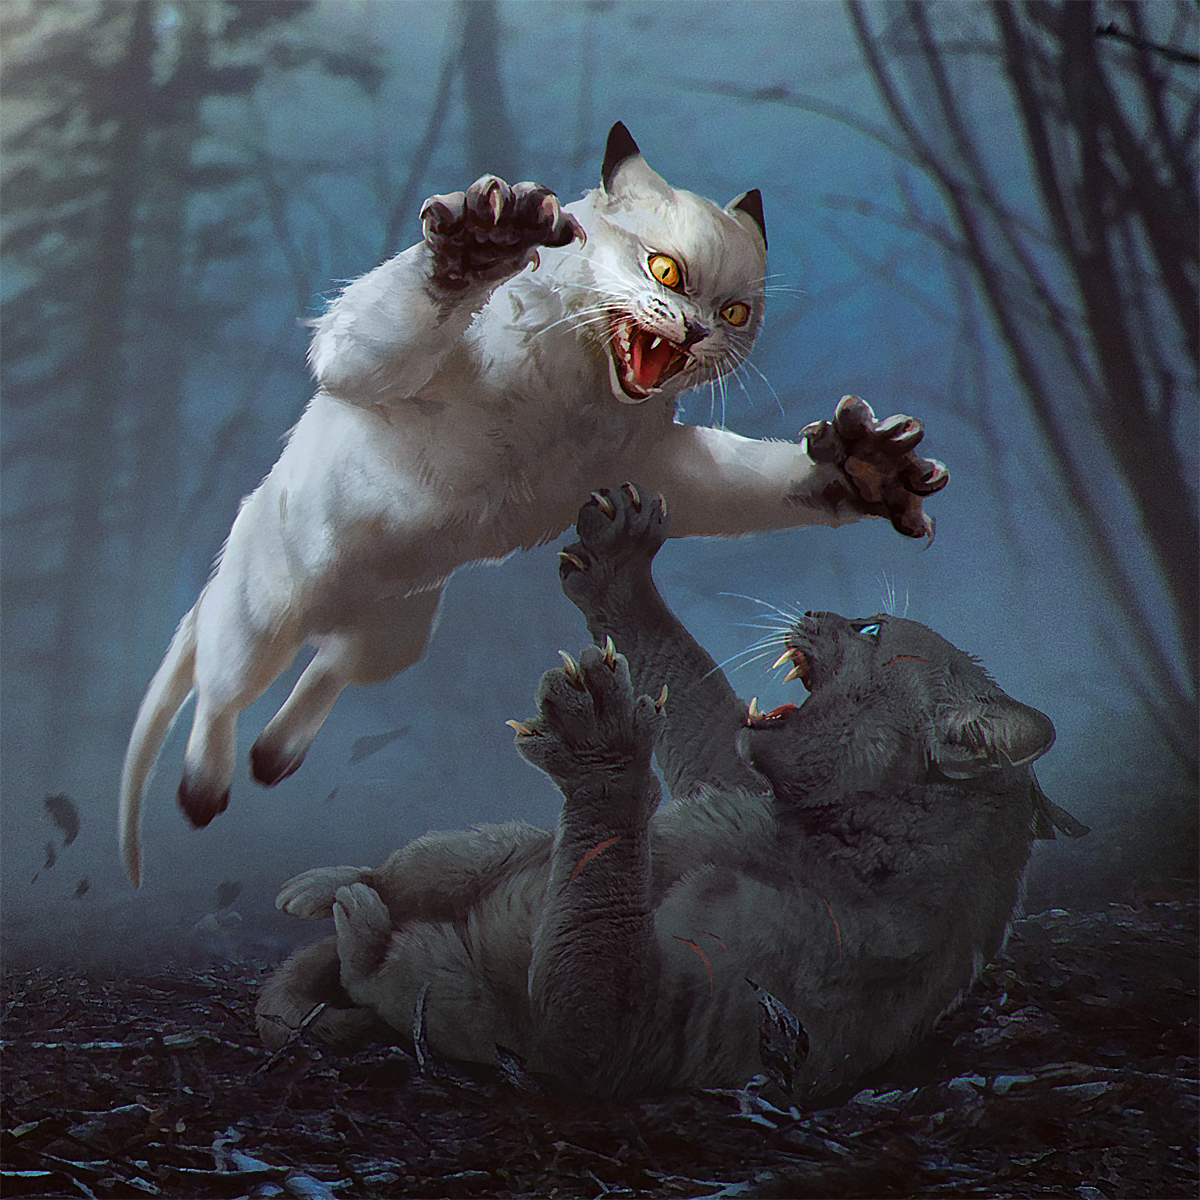 Tigerwisp - Warrior Cats Fanart/Fiction by AthenaRyssa on DeviantArt